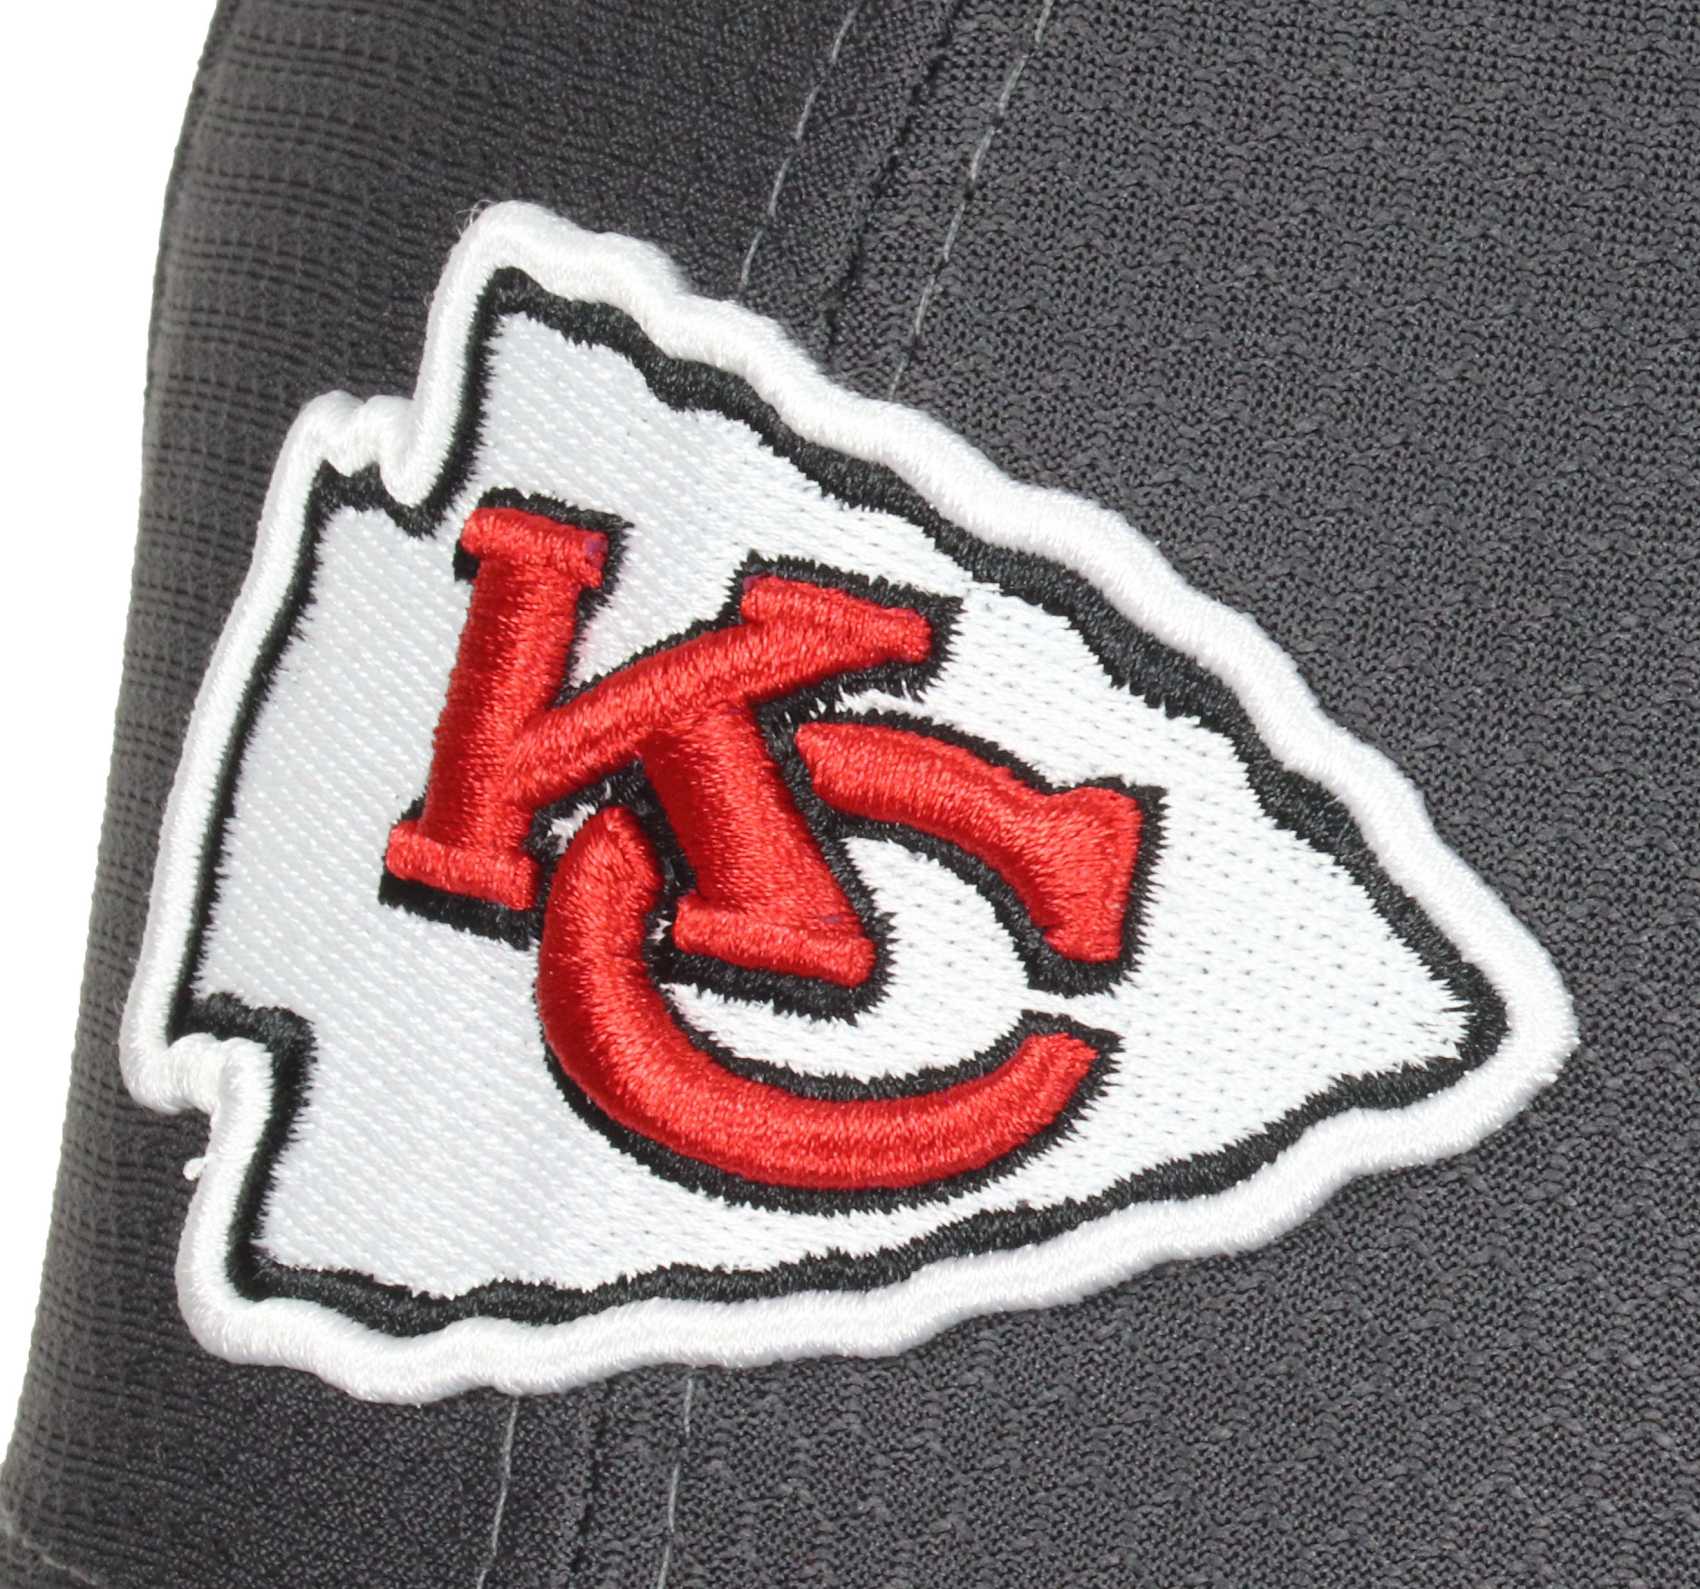 Kansas City Chiefs NFL Hex Tech 39Thirty Stretch Cap New Era